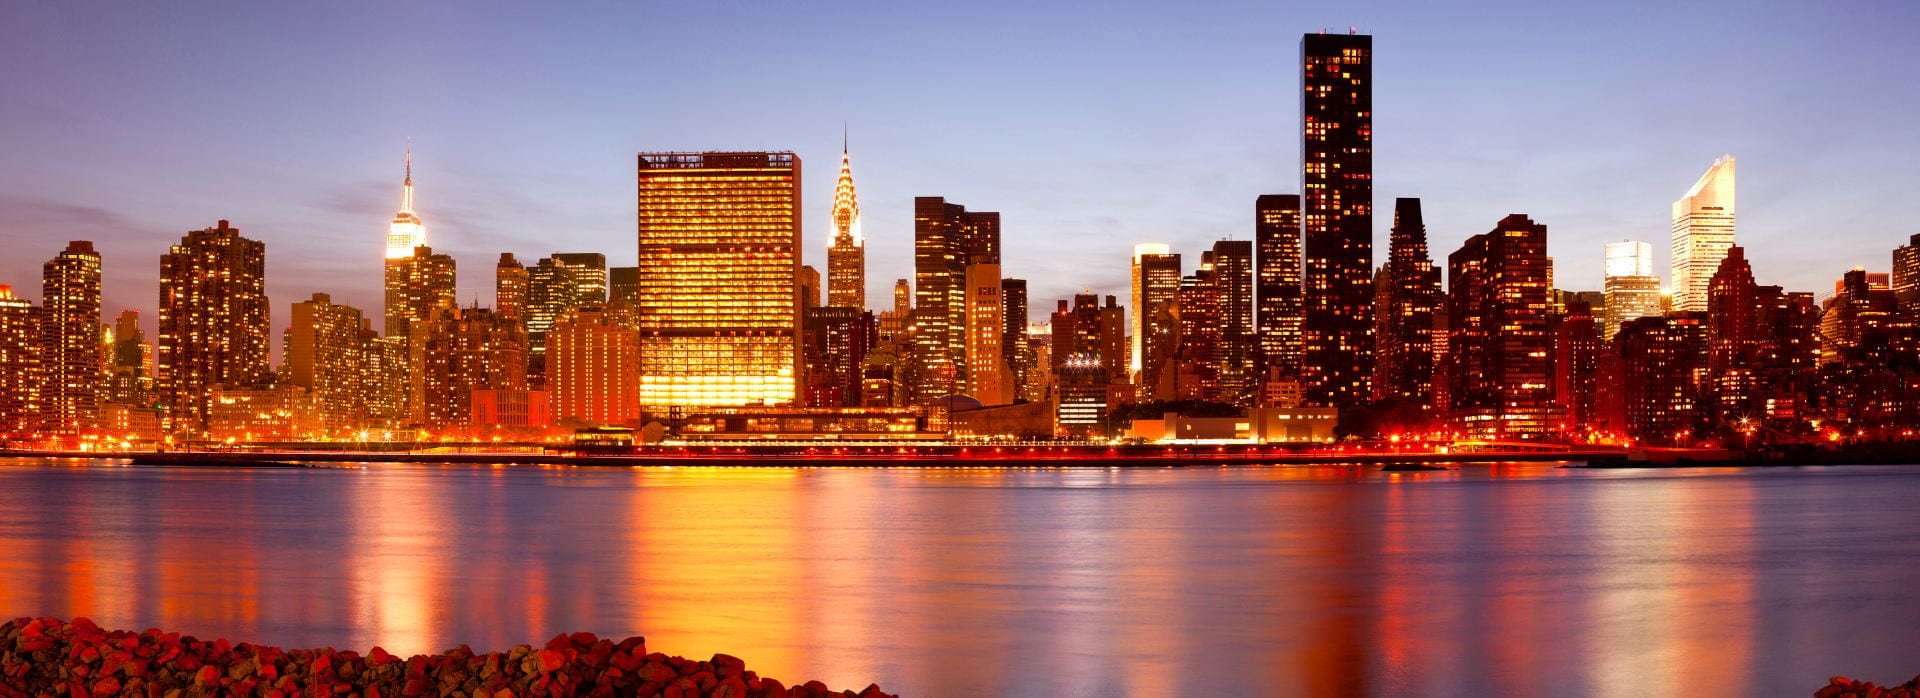 Skyline of buildings at Midtown Manhattan, New York City, NY, USA